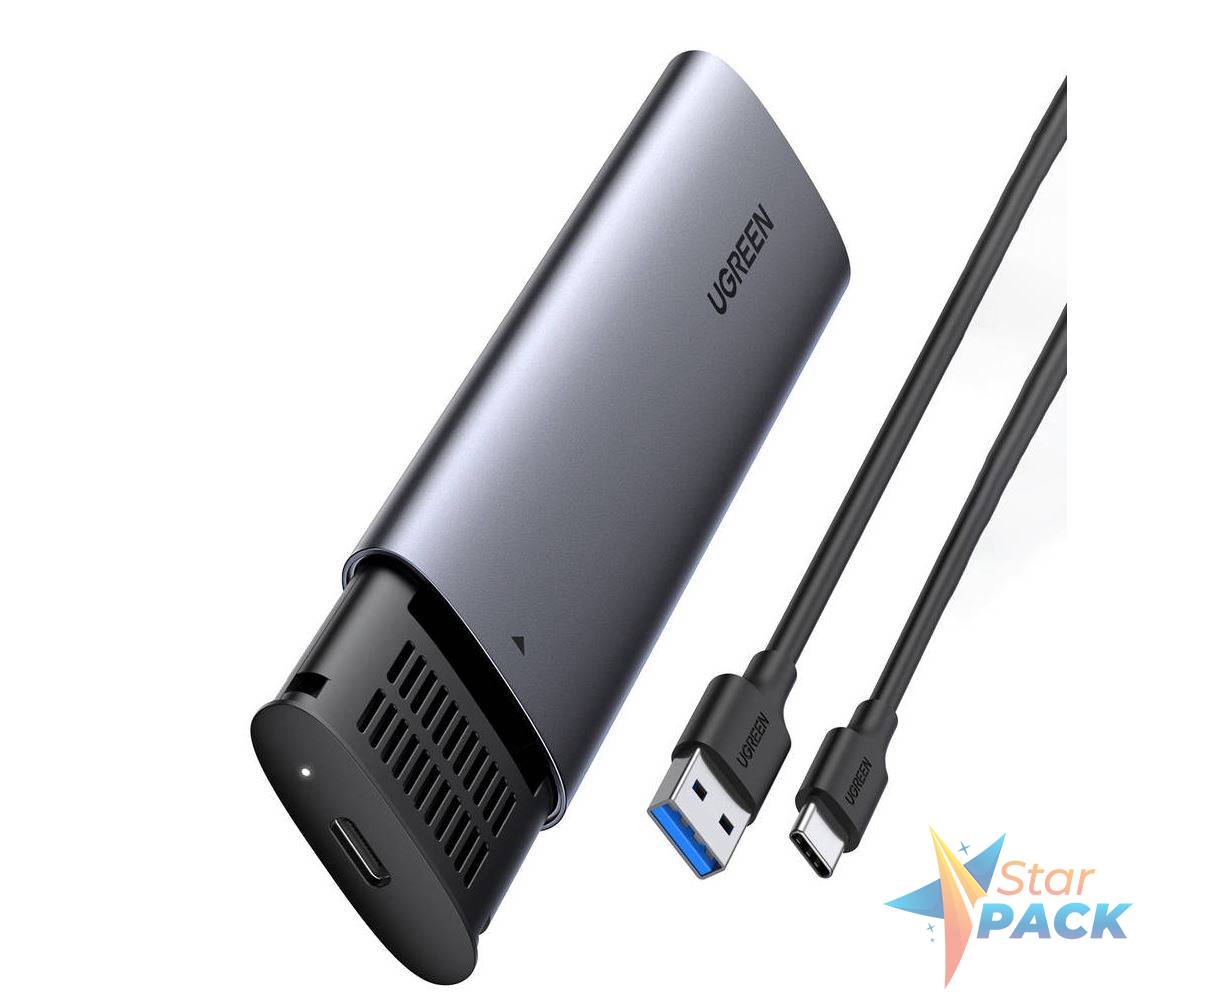 RACK extern Ugreen, CM400 pt SSD M.2 NGFF SATA compatibile cu form factor 2280, 2260, 2242 si 2230, cablu inclus de 50 cm USB Type-C la USB Type-C, 5Gbps, aluminiu, gri  - 6957303819034